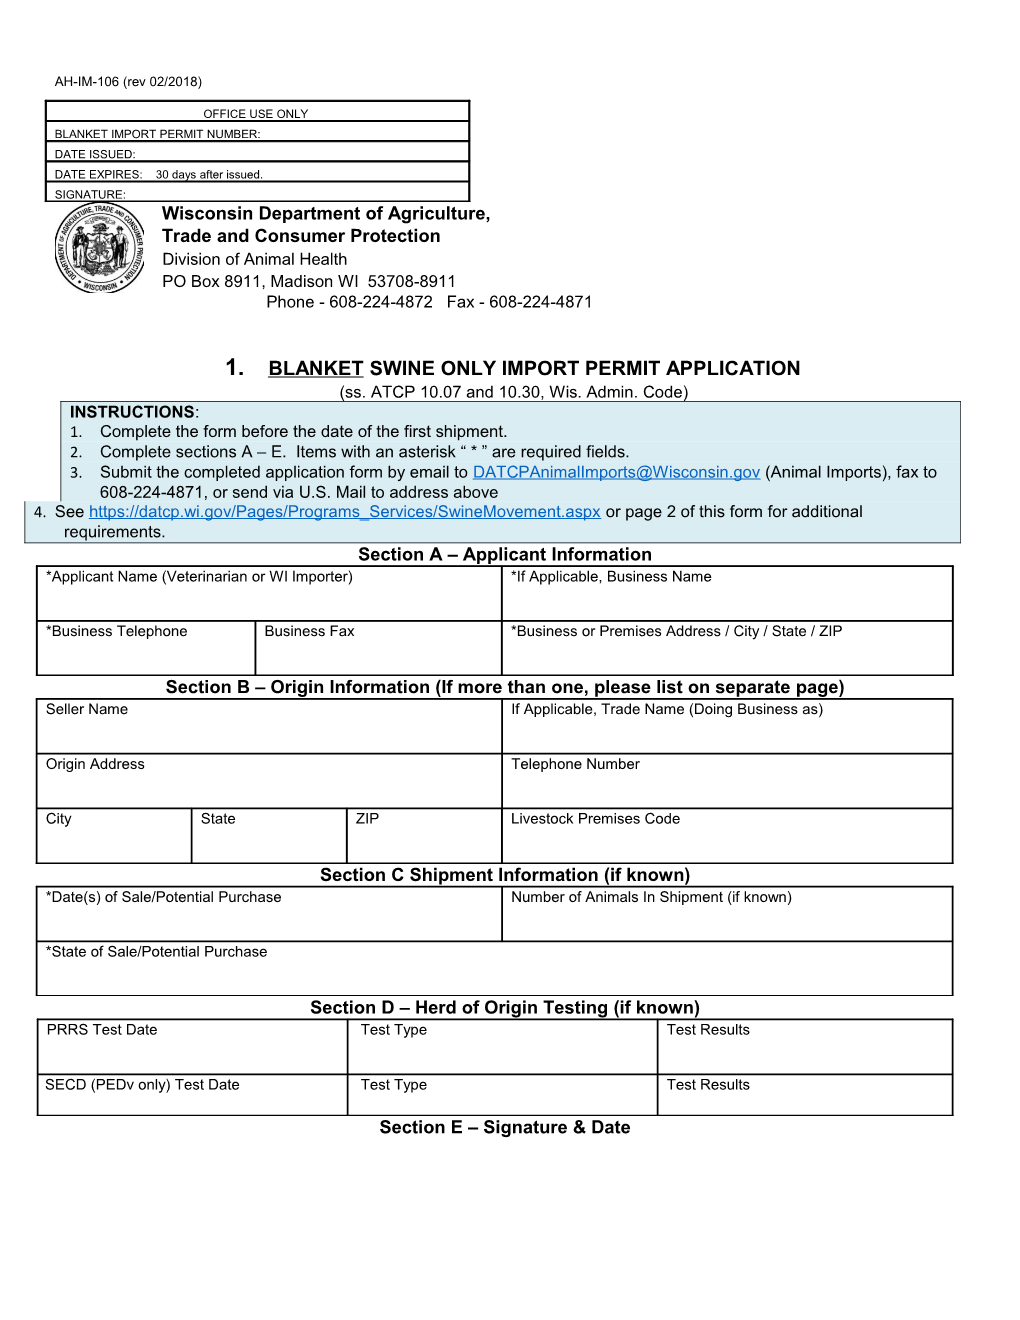 Blanket Swine Import Permit Application